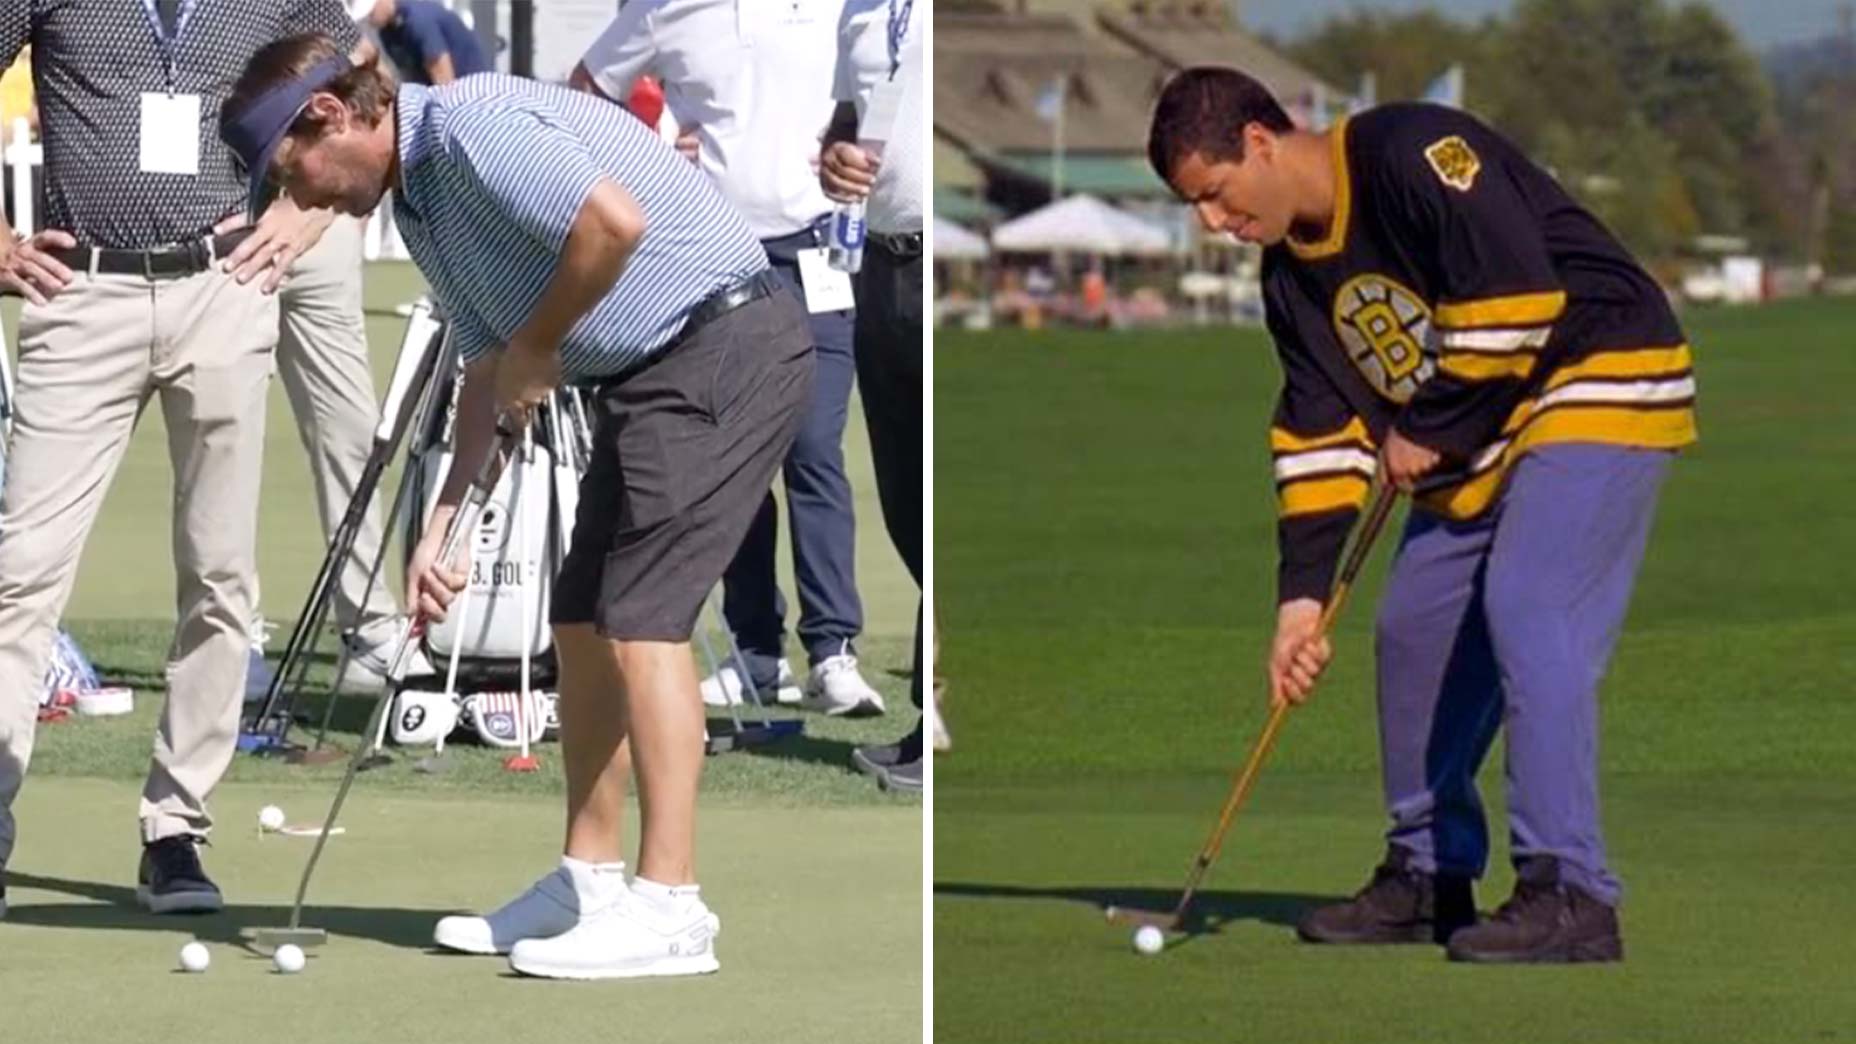 Spencer Levin's new putting stroke evokes a certain hockey loving golf movie hero.